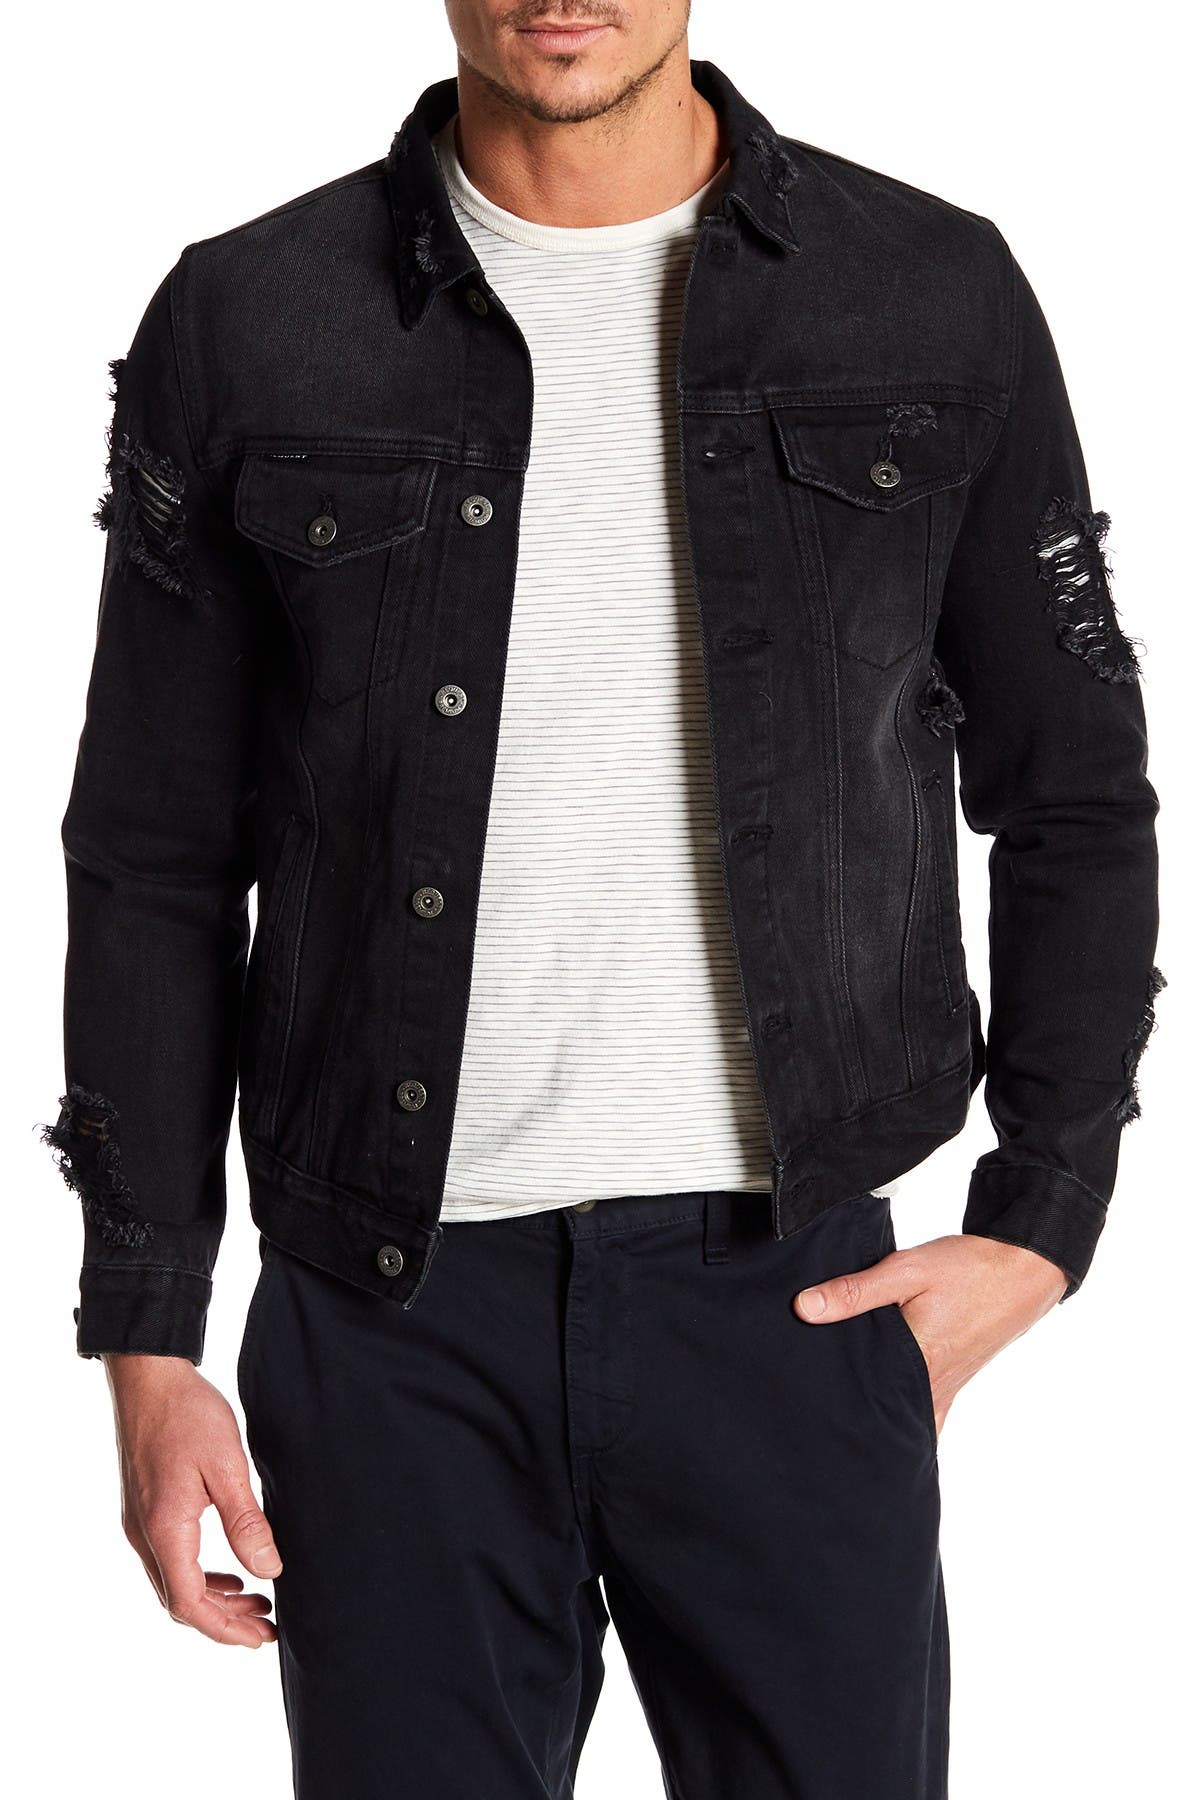 black jeans jacket